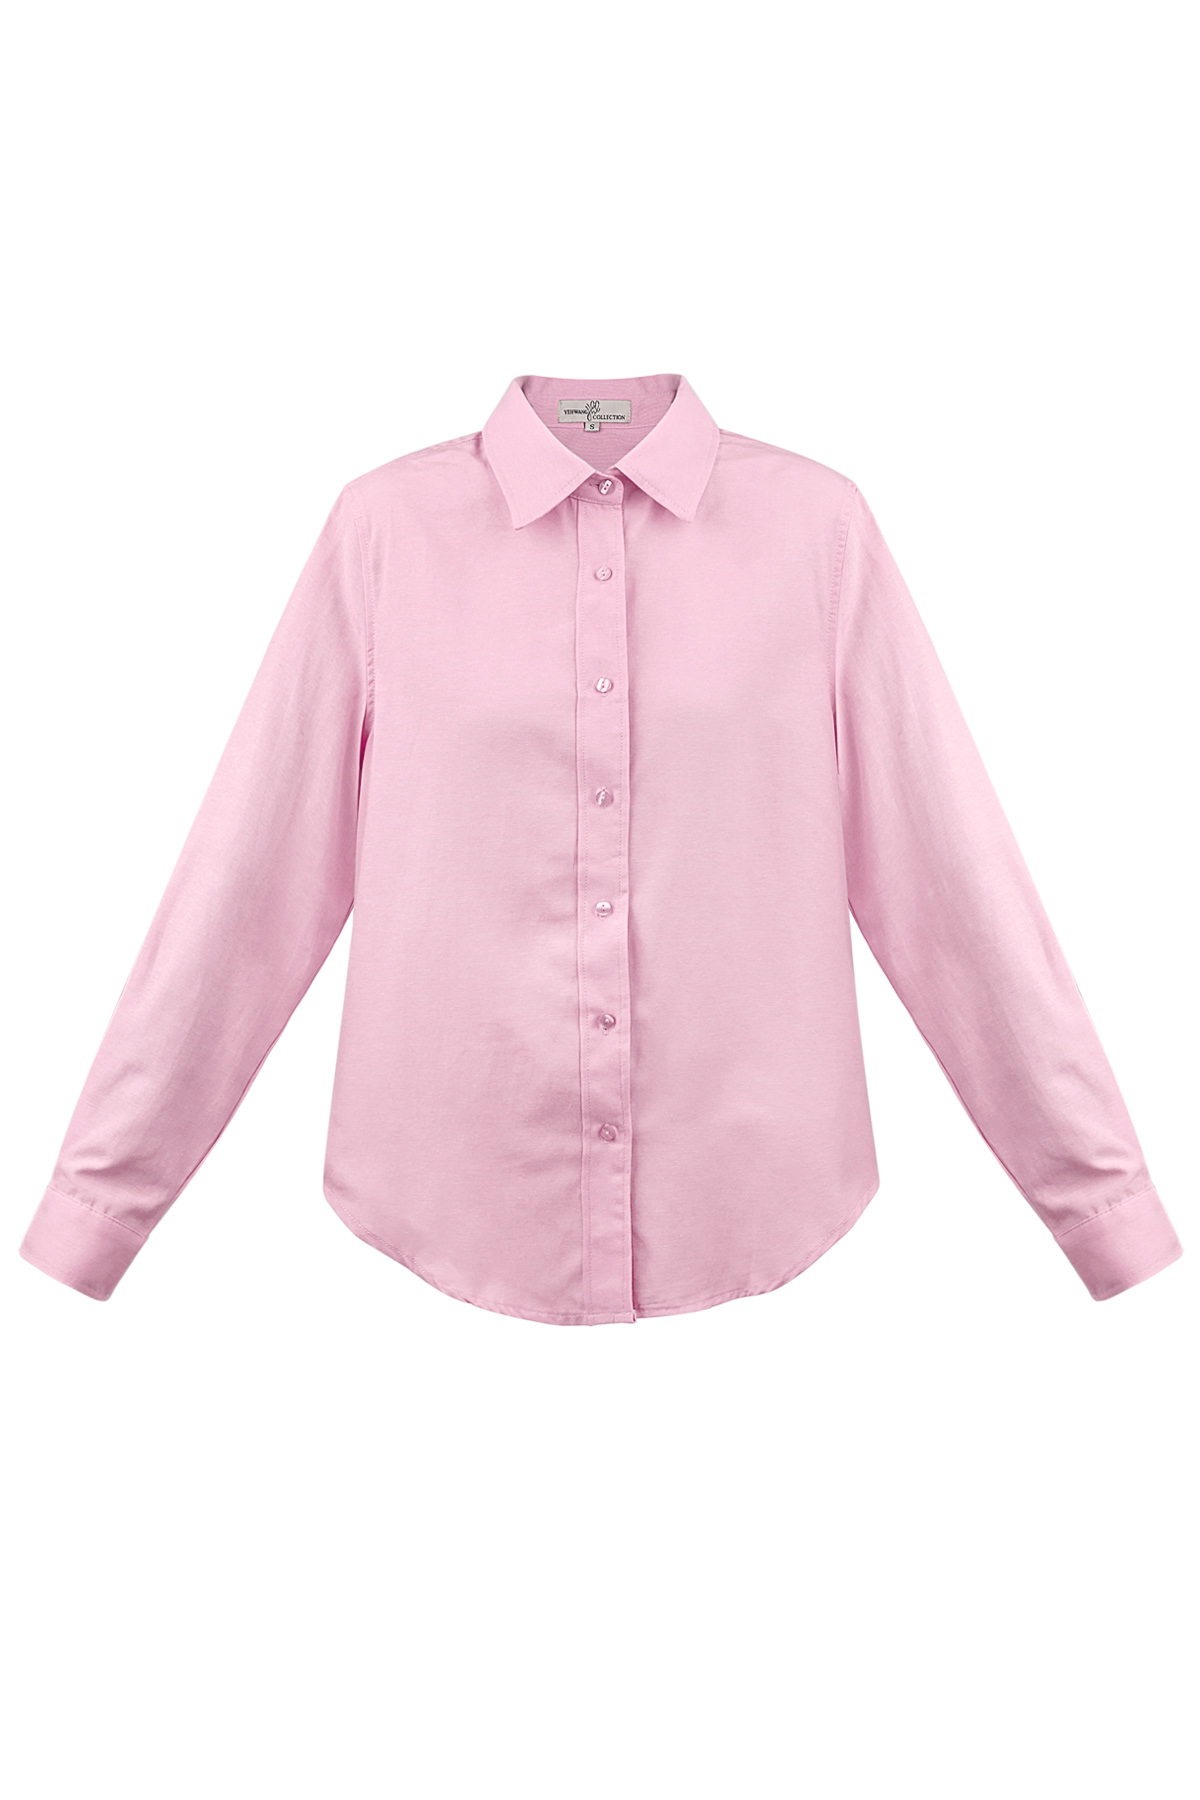 Basic plain blouse - pink 